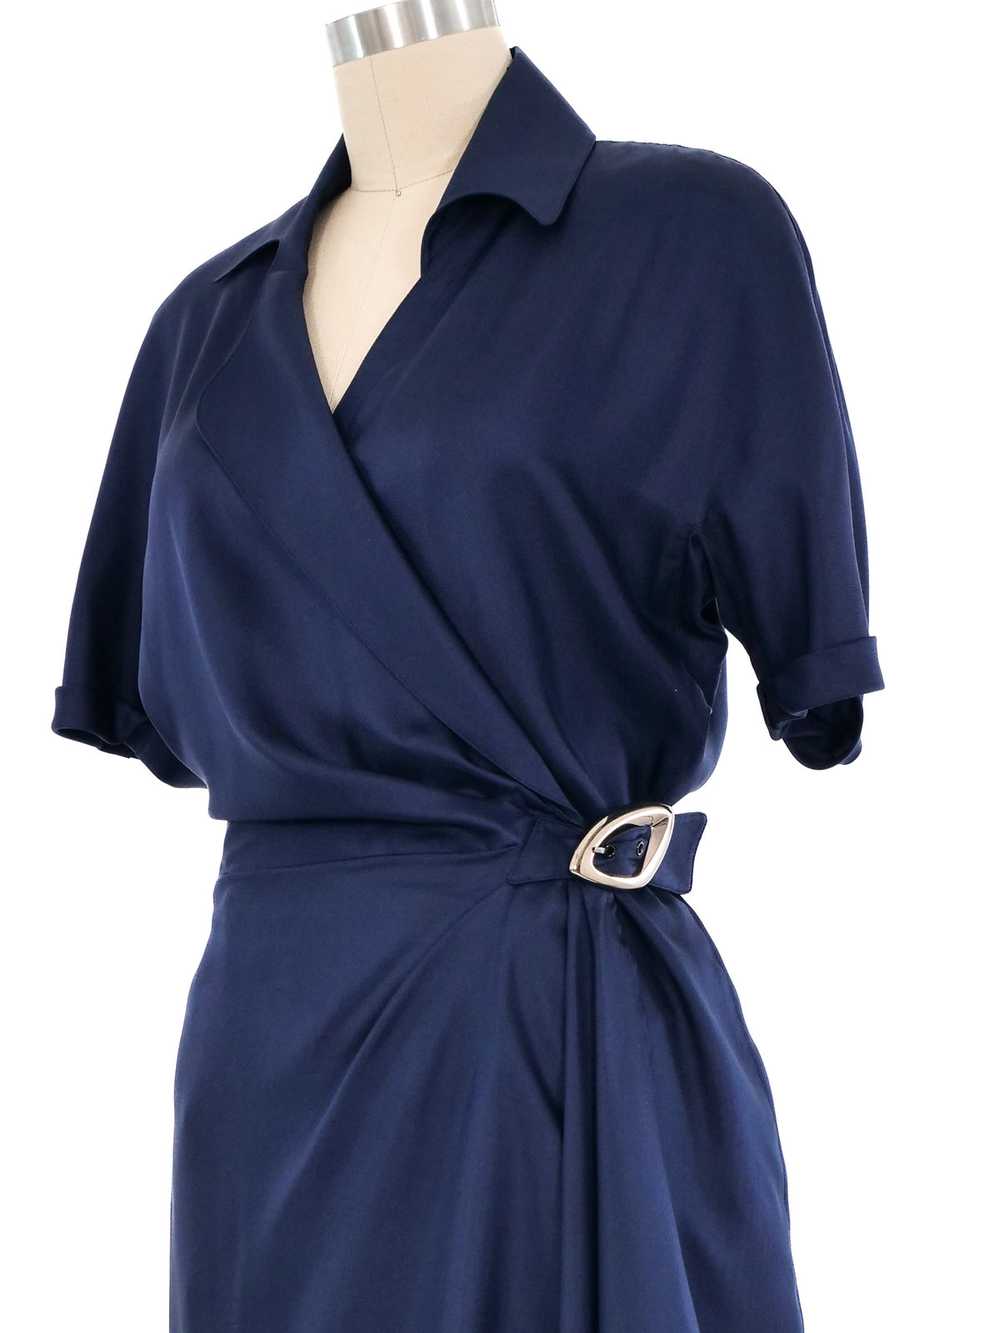 Thierry Mugler Navy Silk Wrap Dress - image 5